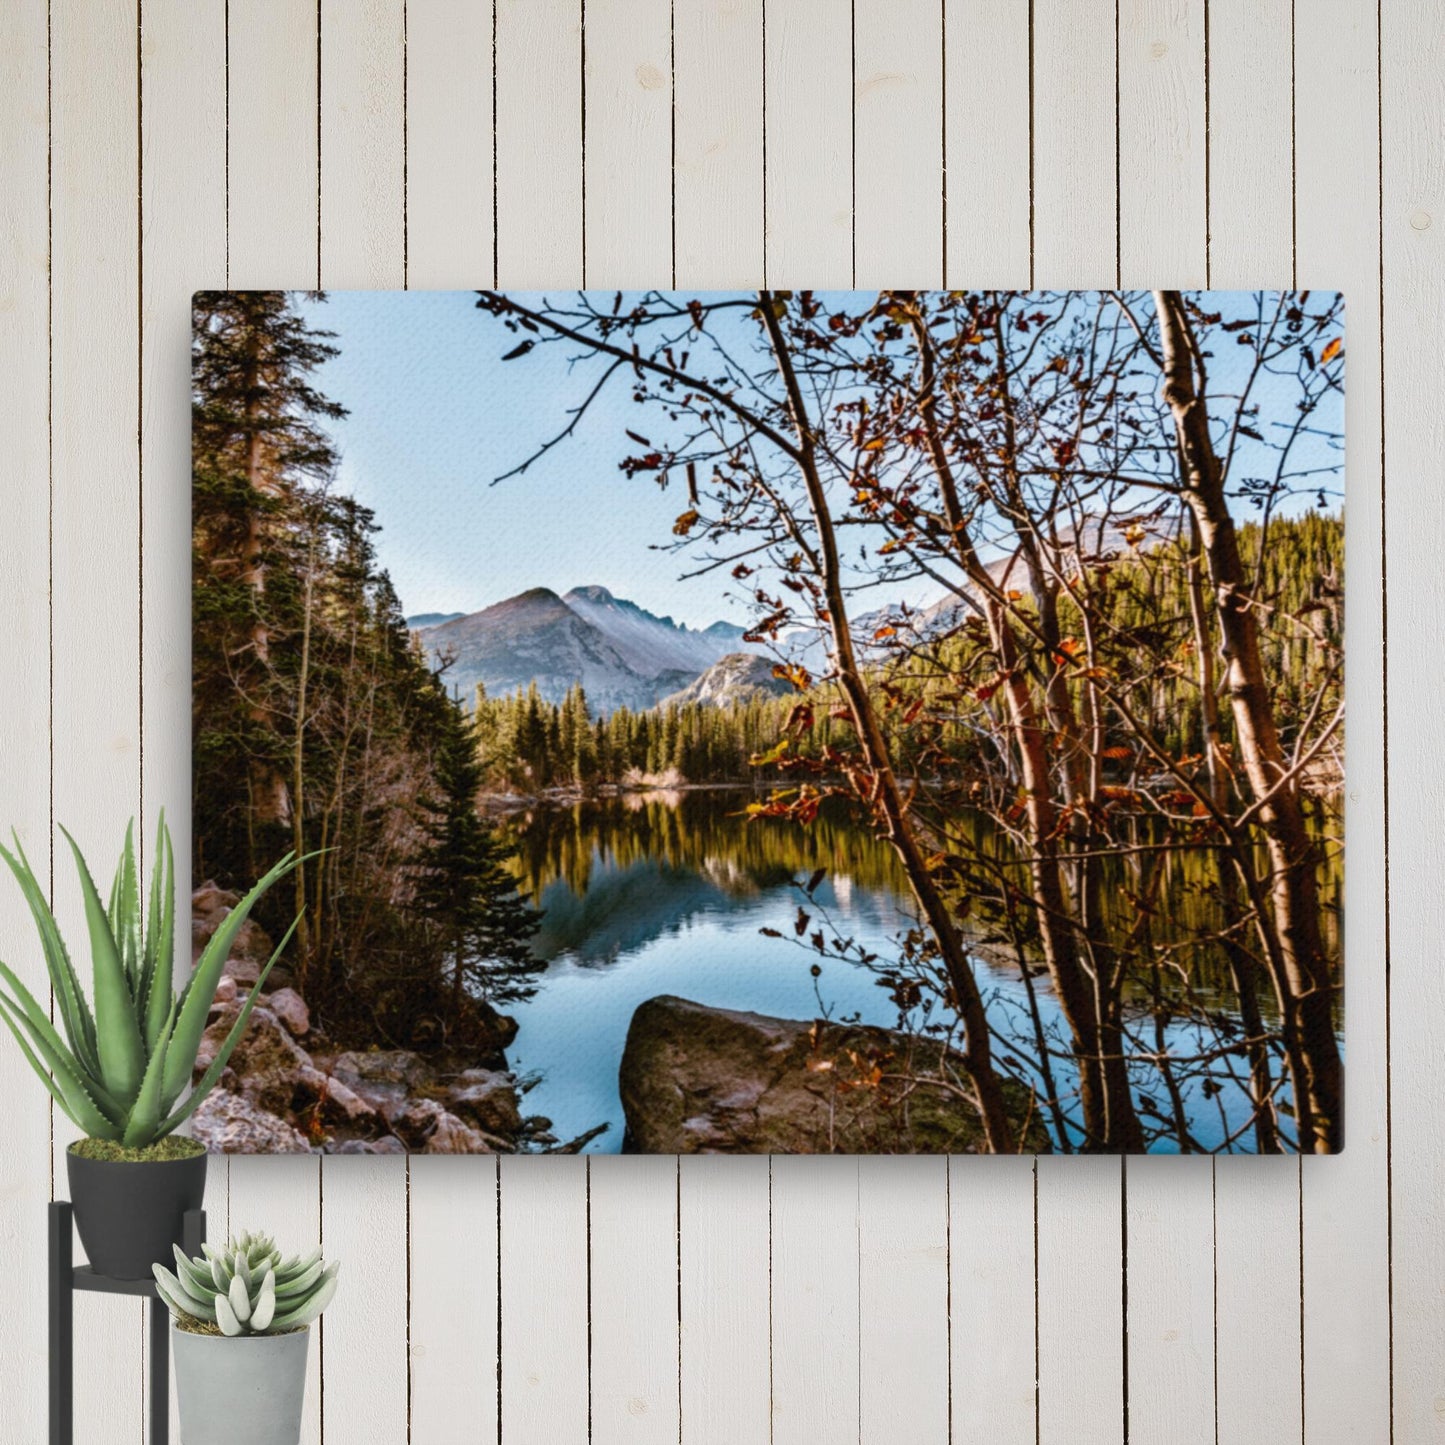 Rocky Mountain Bear Lake Colorado Canvas Wall Art Decor, Reflections, Serenity, Autumn Landscape, Nature Wall Art, Mountains Tree Scenery